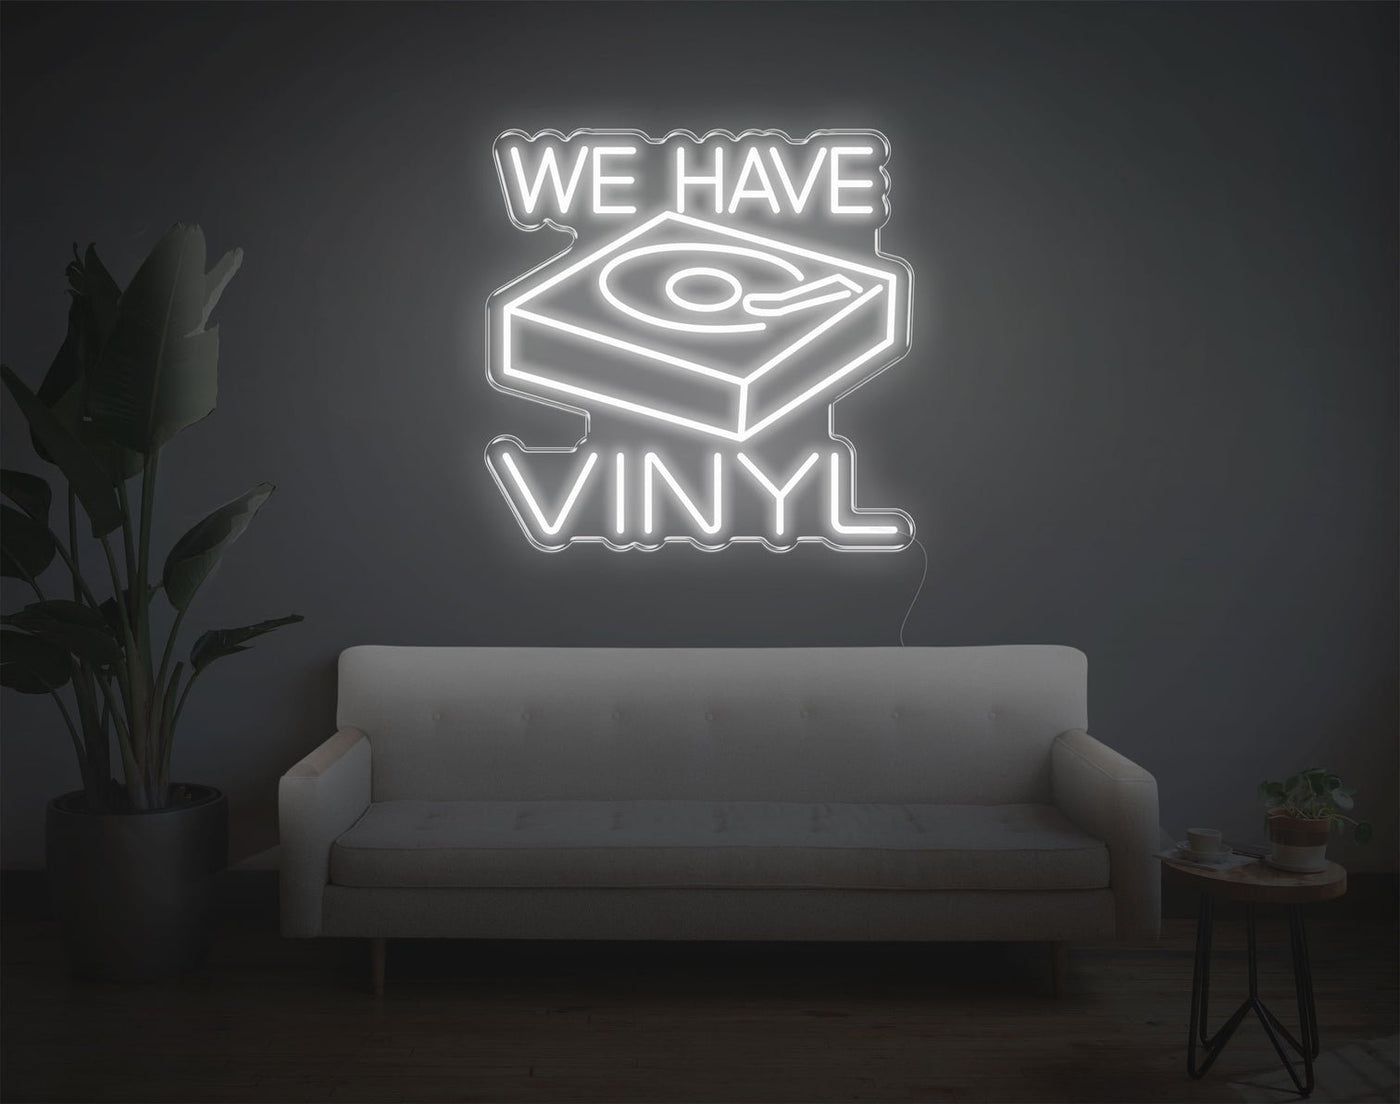 We Have Vinyl LED Neon Sign - 20inch x 20inchWhite